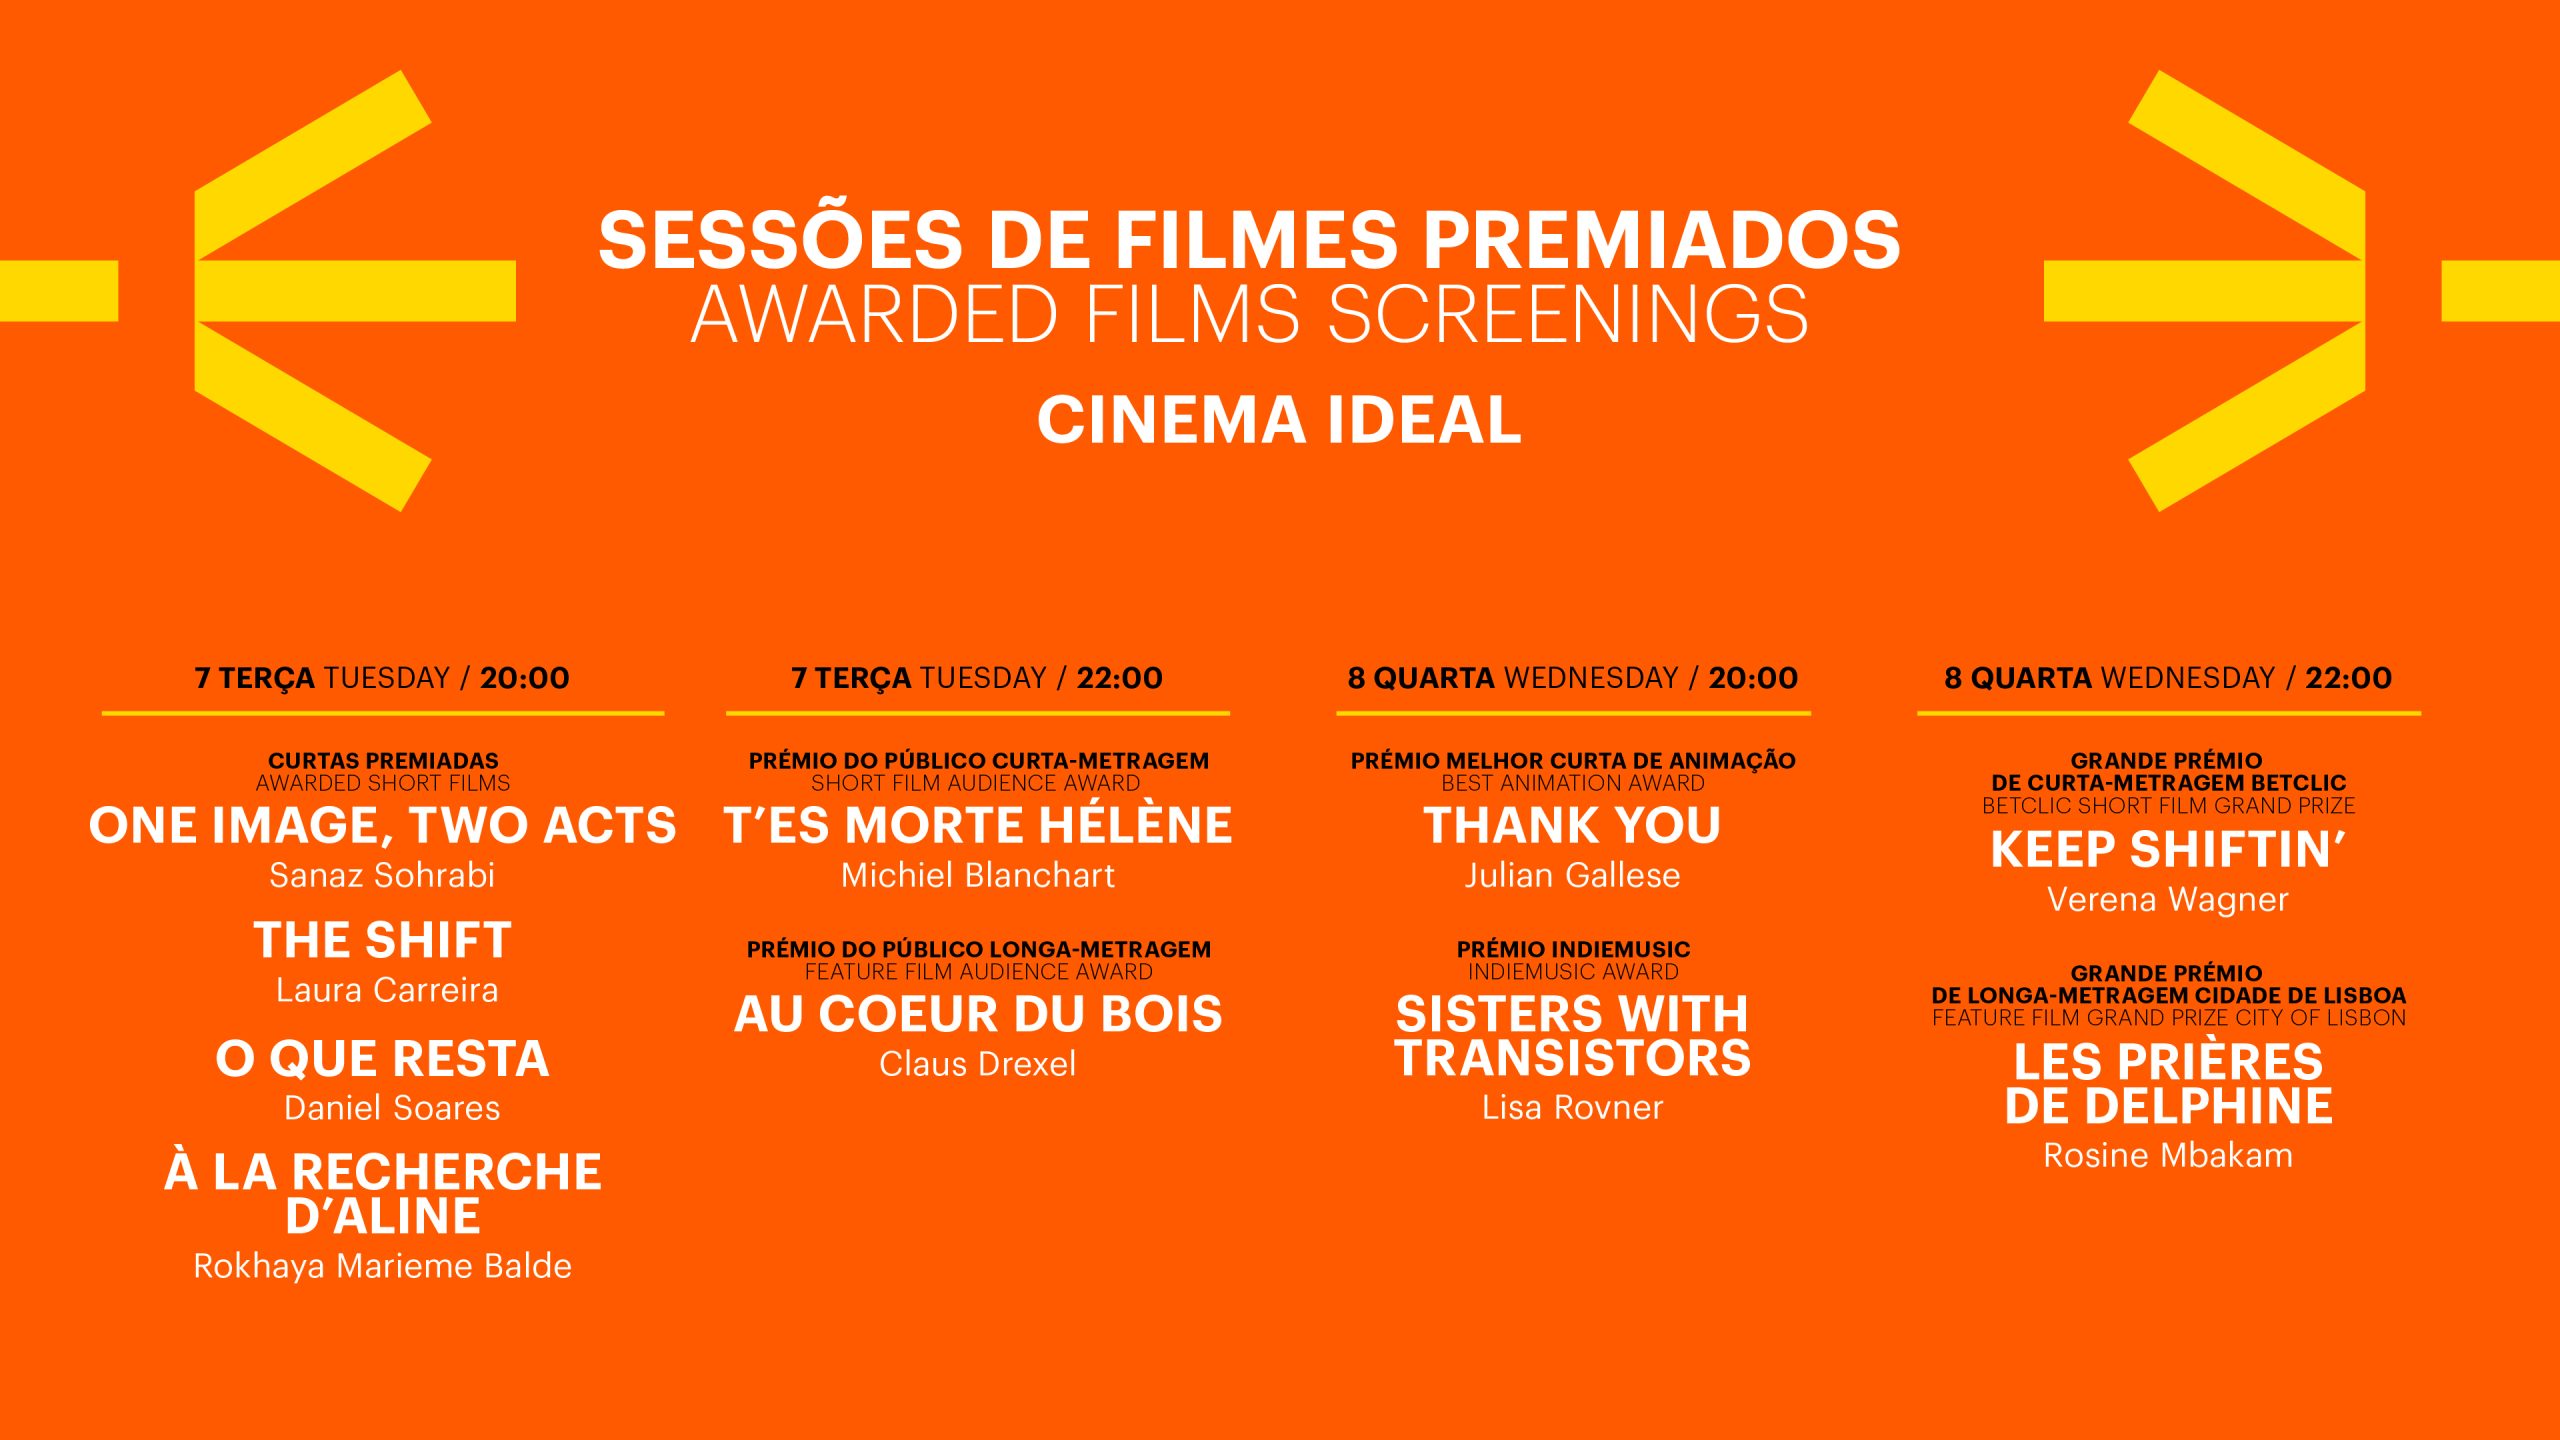 IndieLisboa Awarded Film Screenings at Cinema Ideal